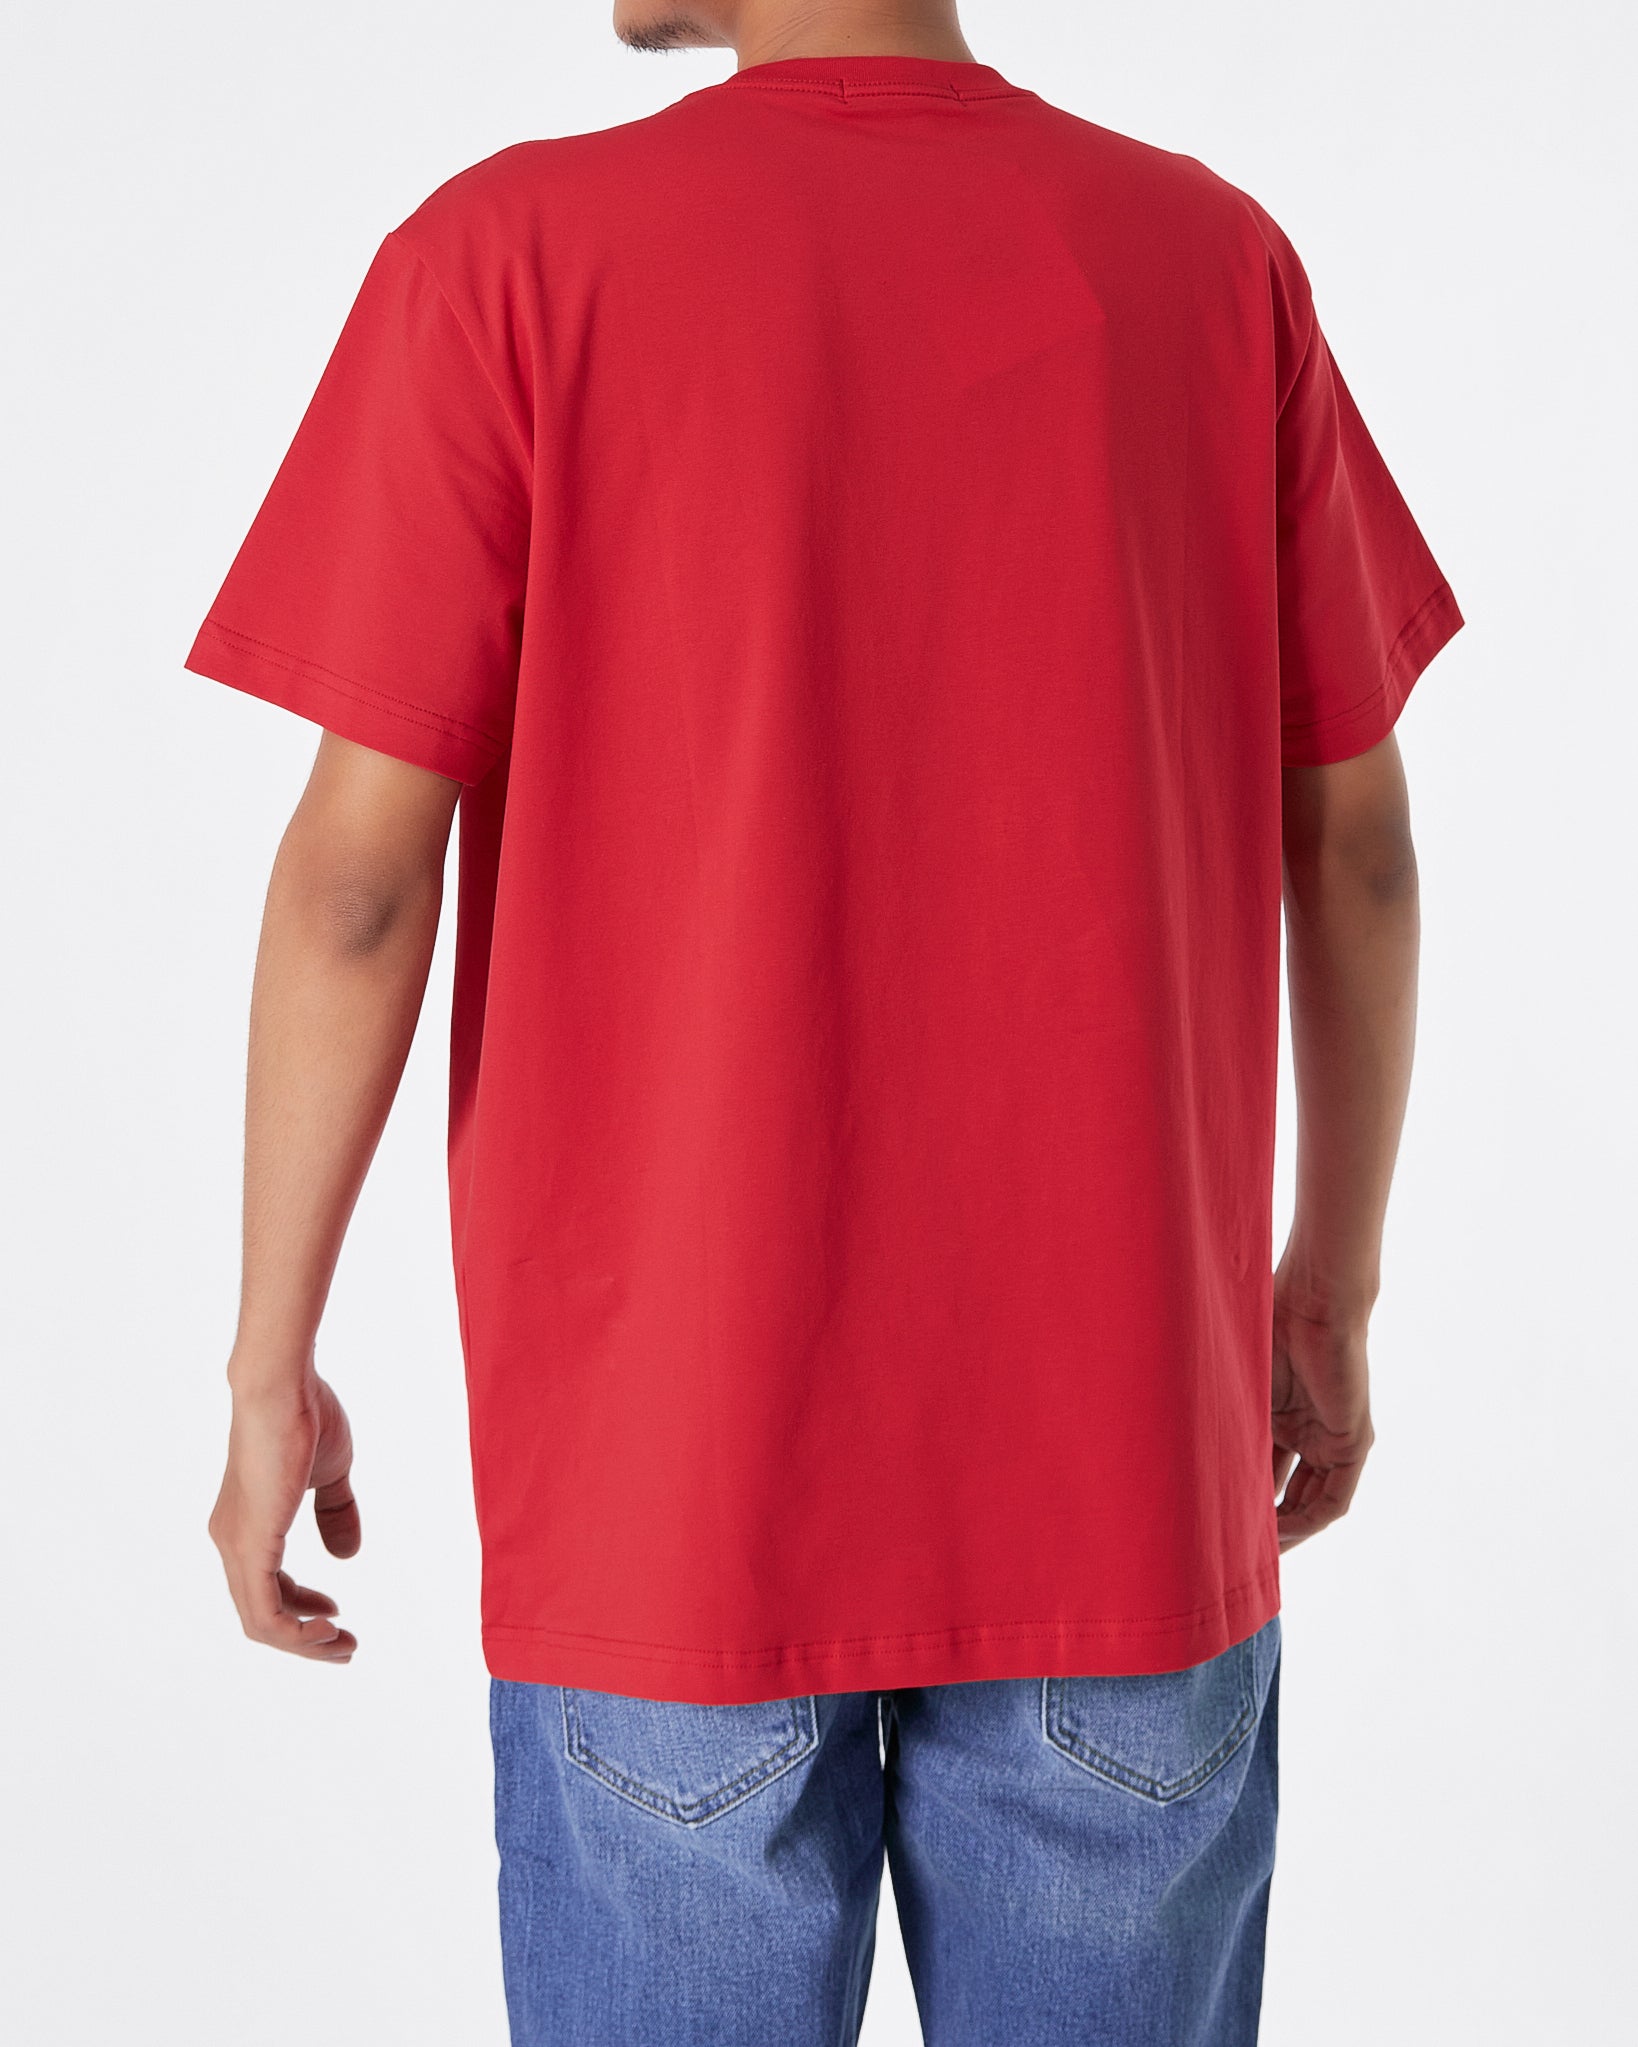 PA Teddy Bear Printed Men Red T-Shirt 15.90